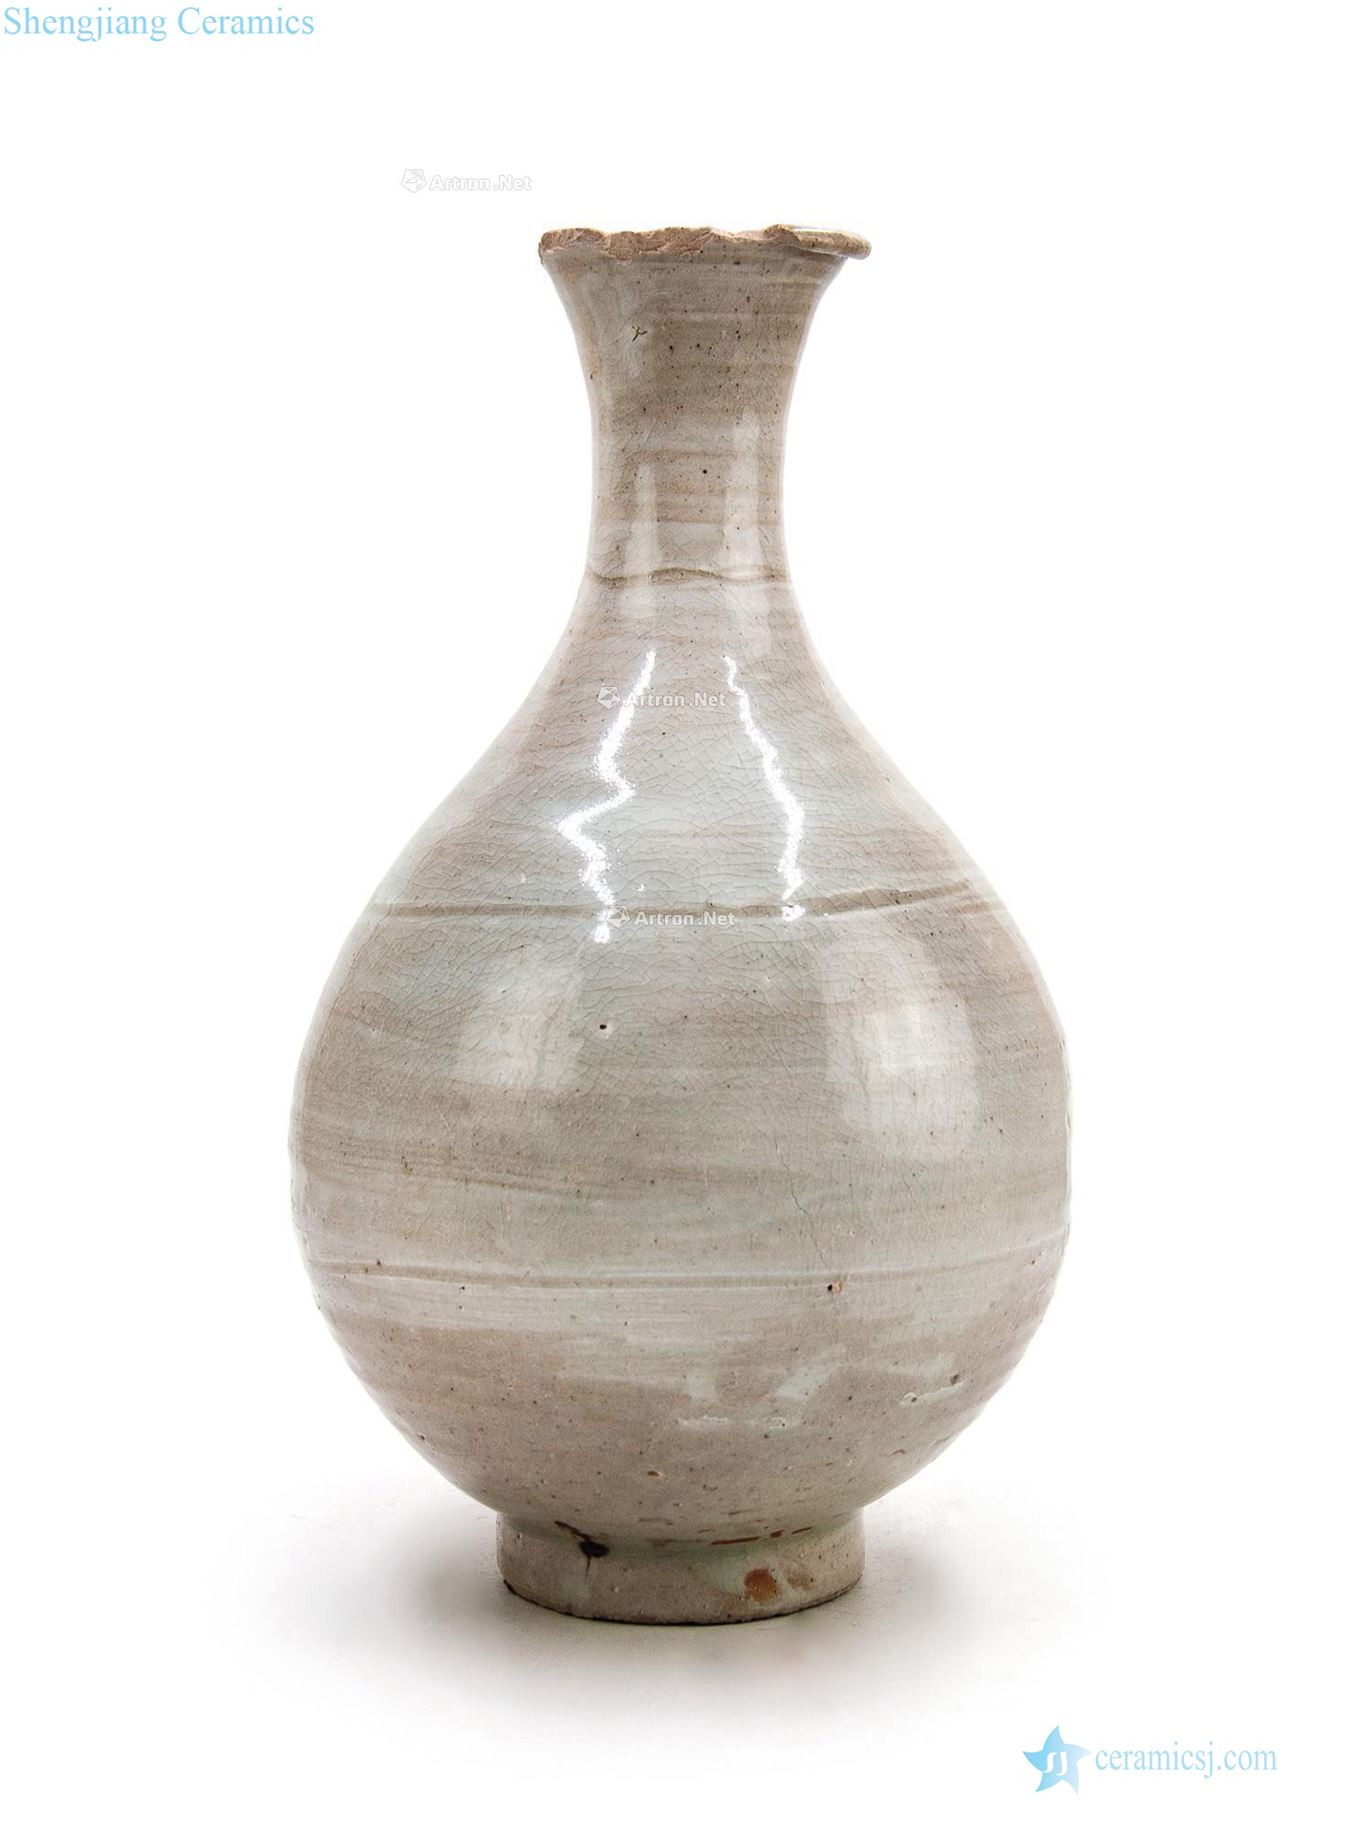 Chosun dynasty (1392-1910), white glaze okho spring bottle